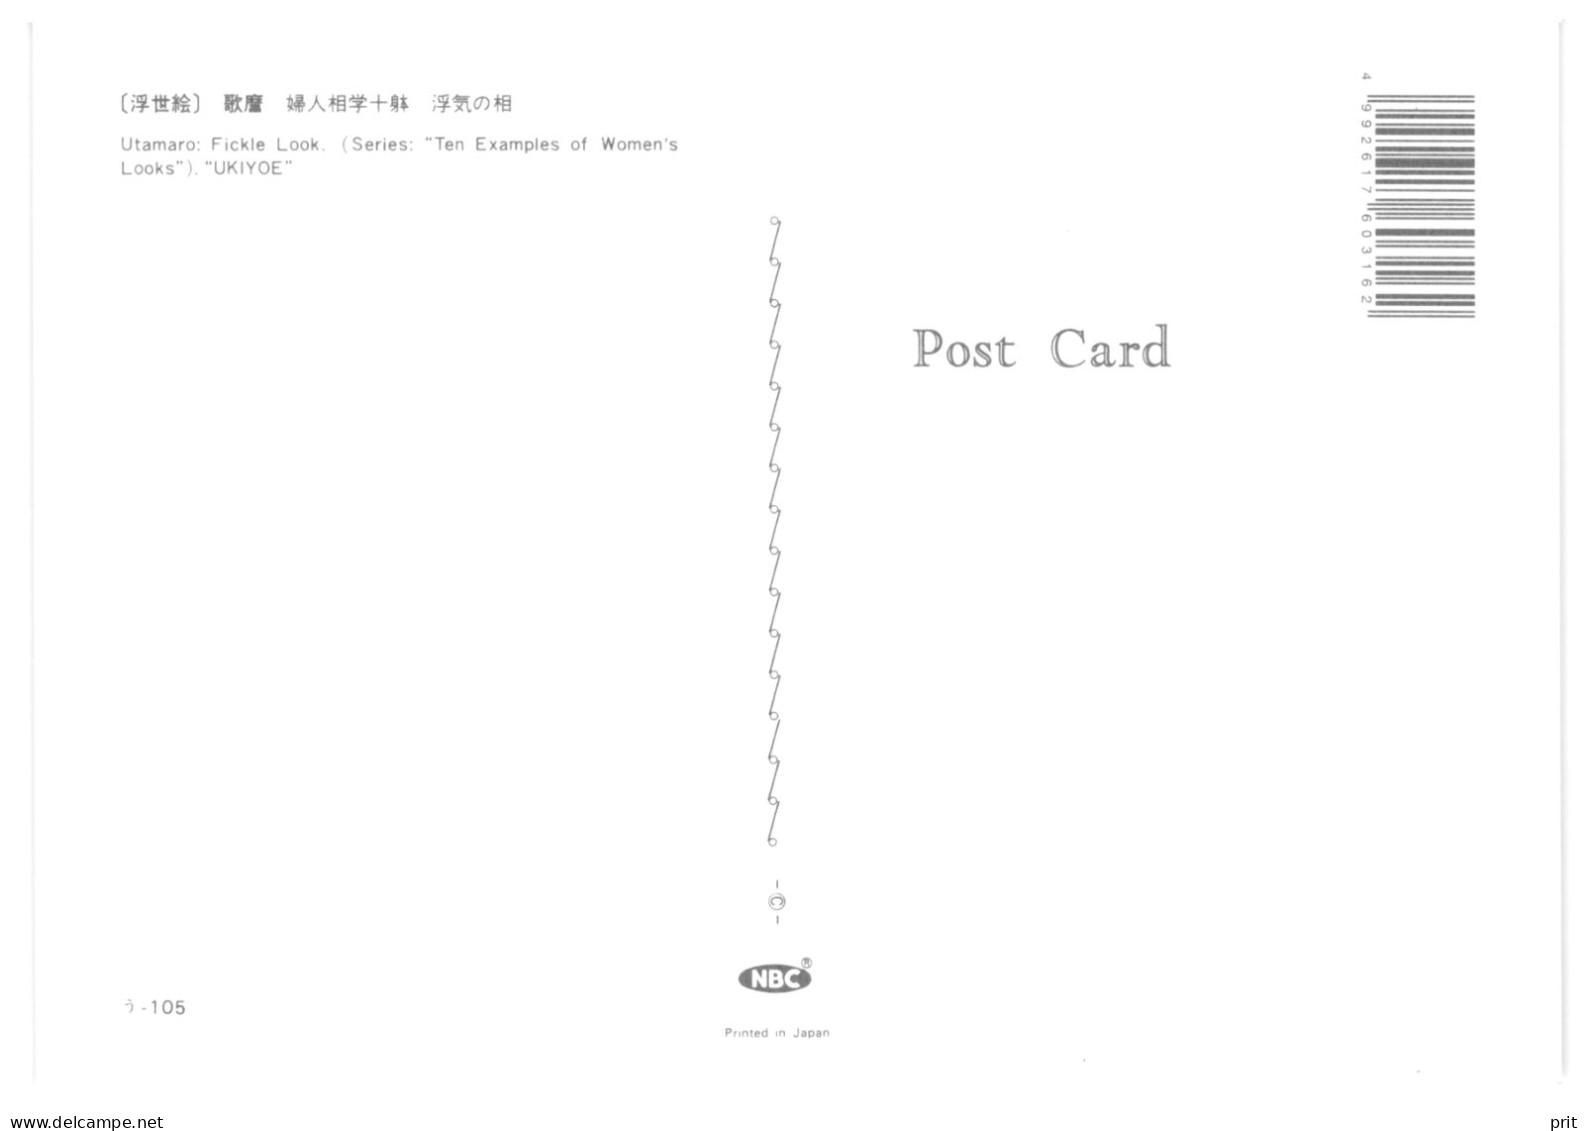 Utamaro Fickle Look, UKIYOE, Ten Examples Of Women's Looks. Unused Postcard. Publisher NBC, Japan - Malerei & Gemälde